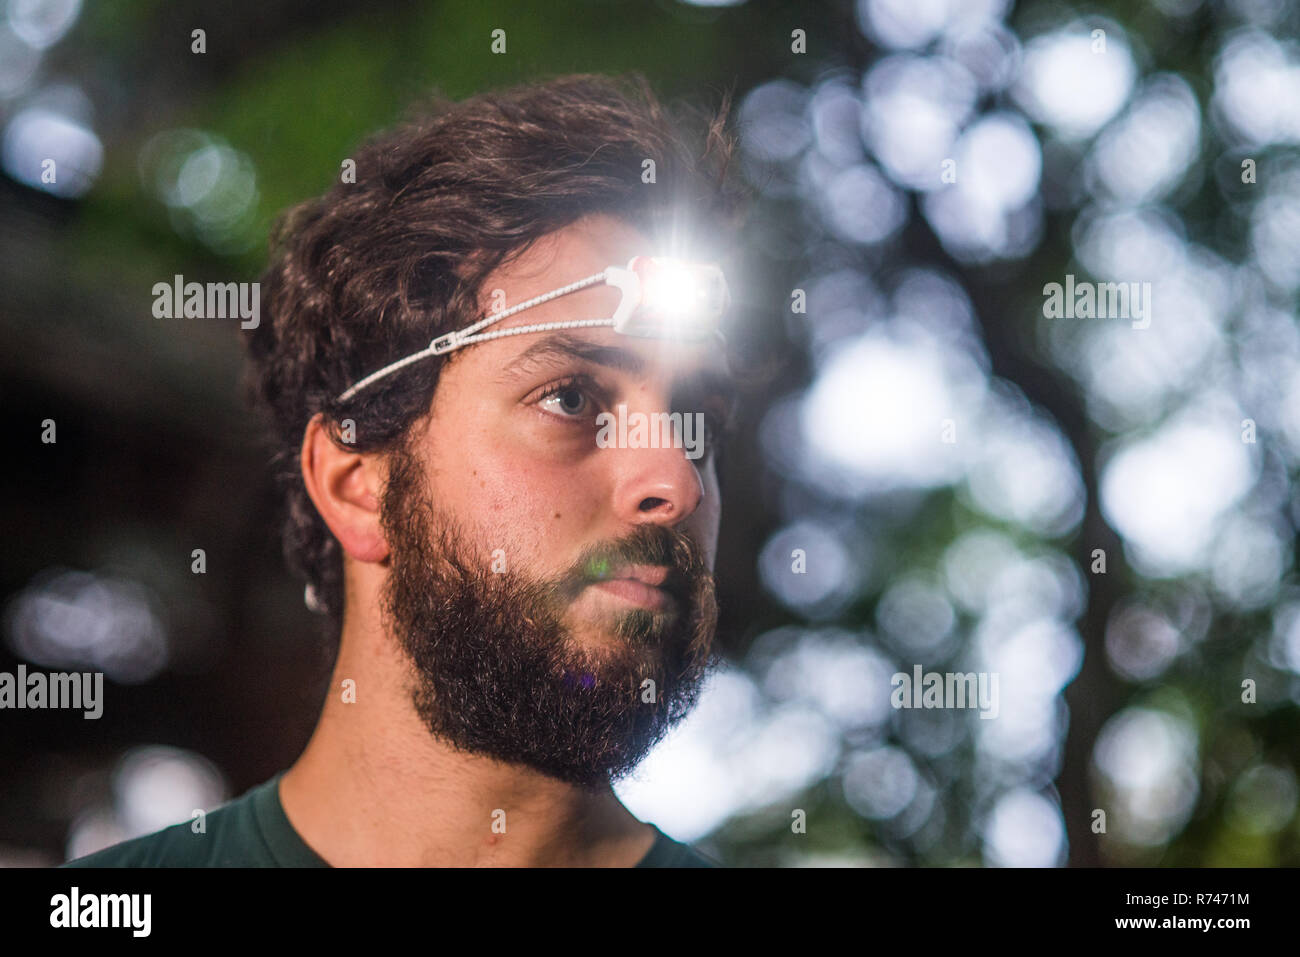 Runner with headlamp Stock Photo